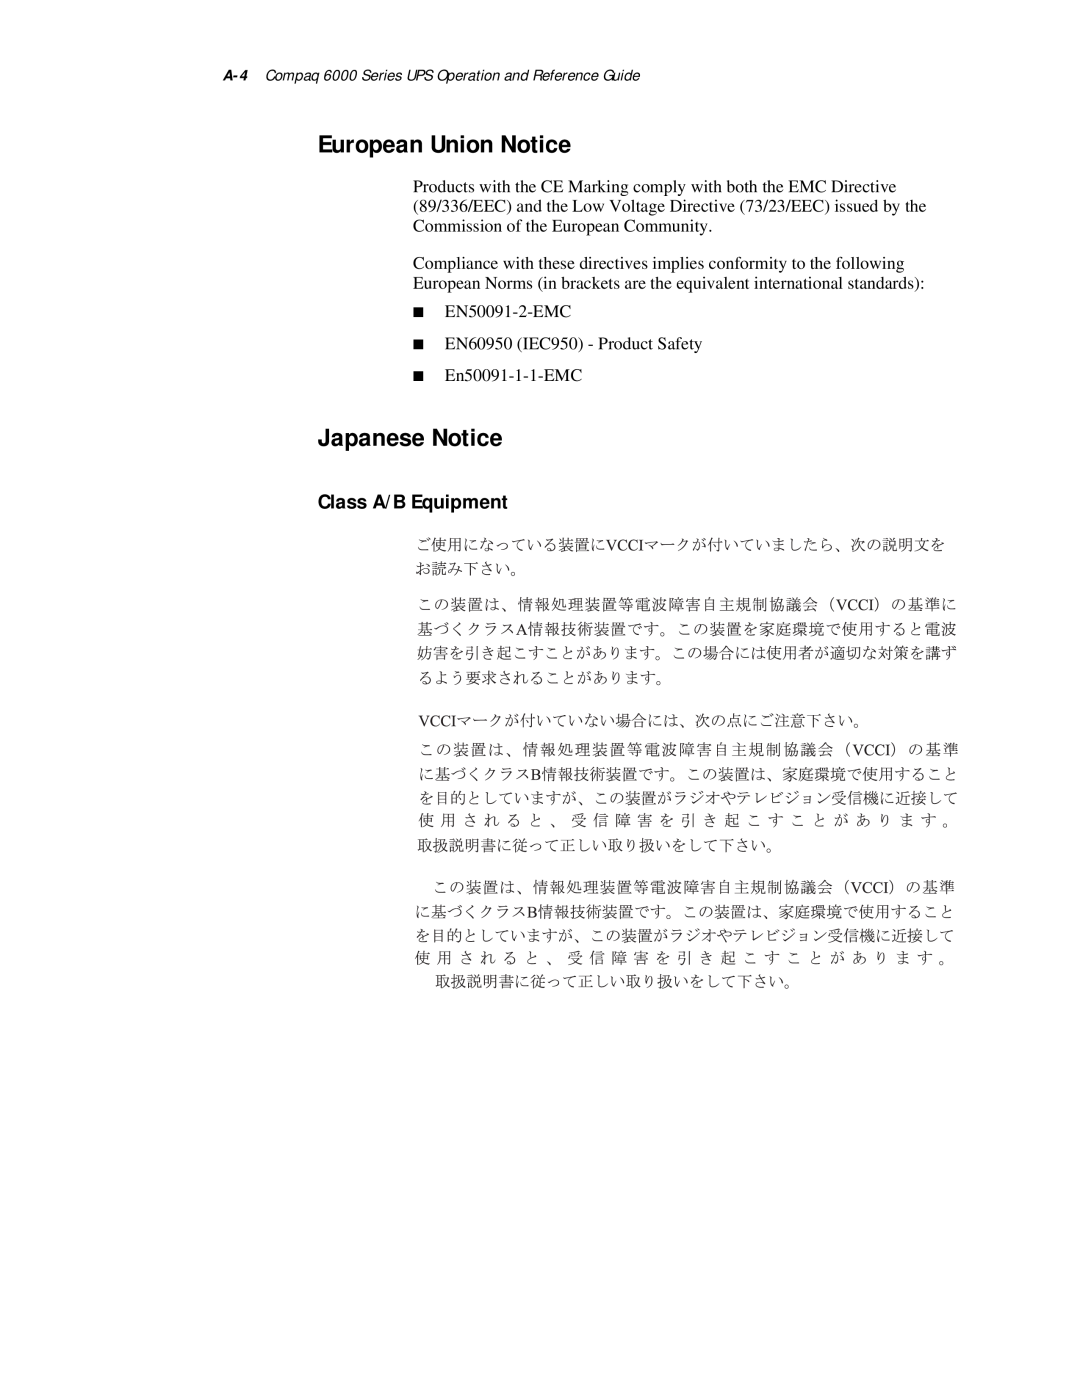 Compaq R6000 Series manual European Union Notice, Japanese Notice, Class A/B Equipment 